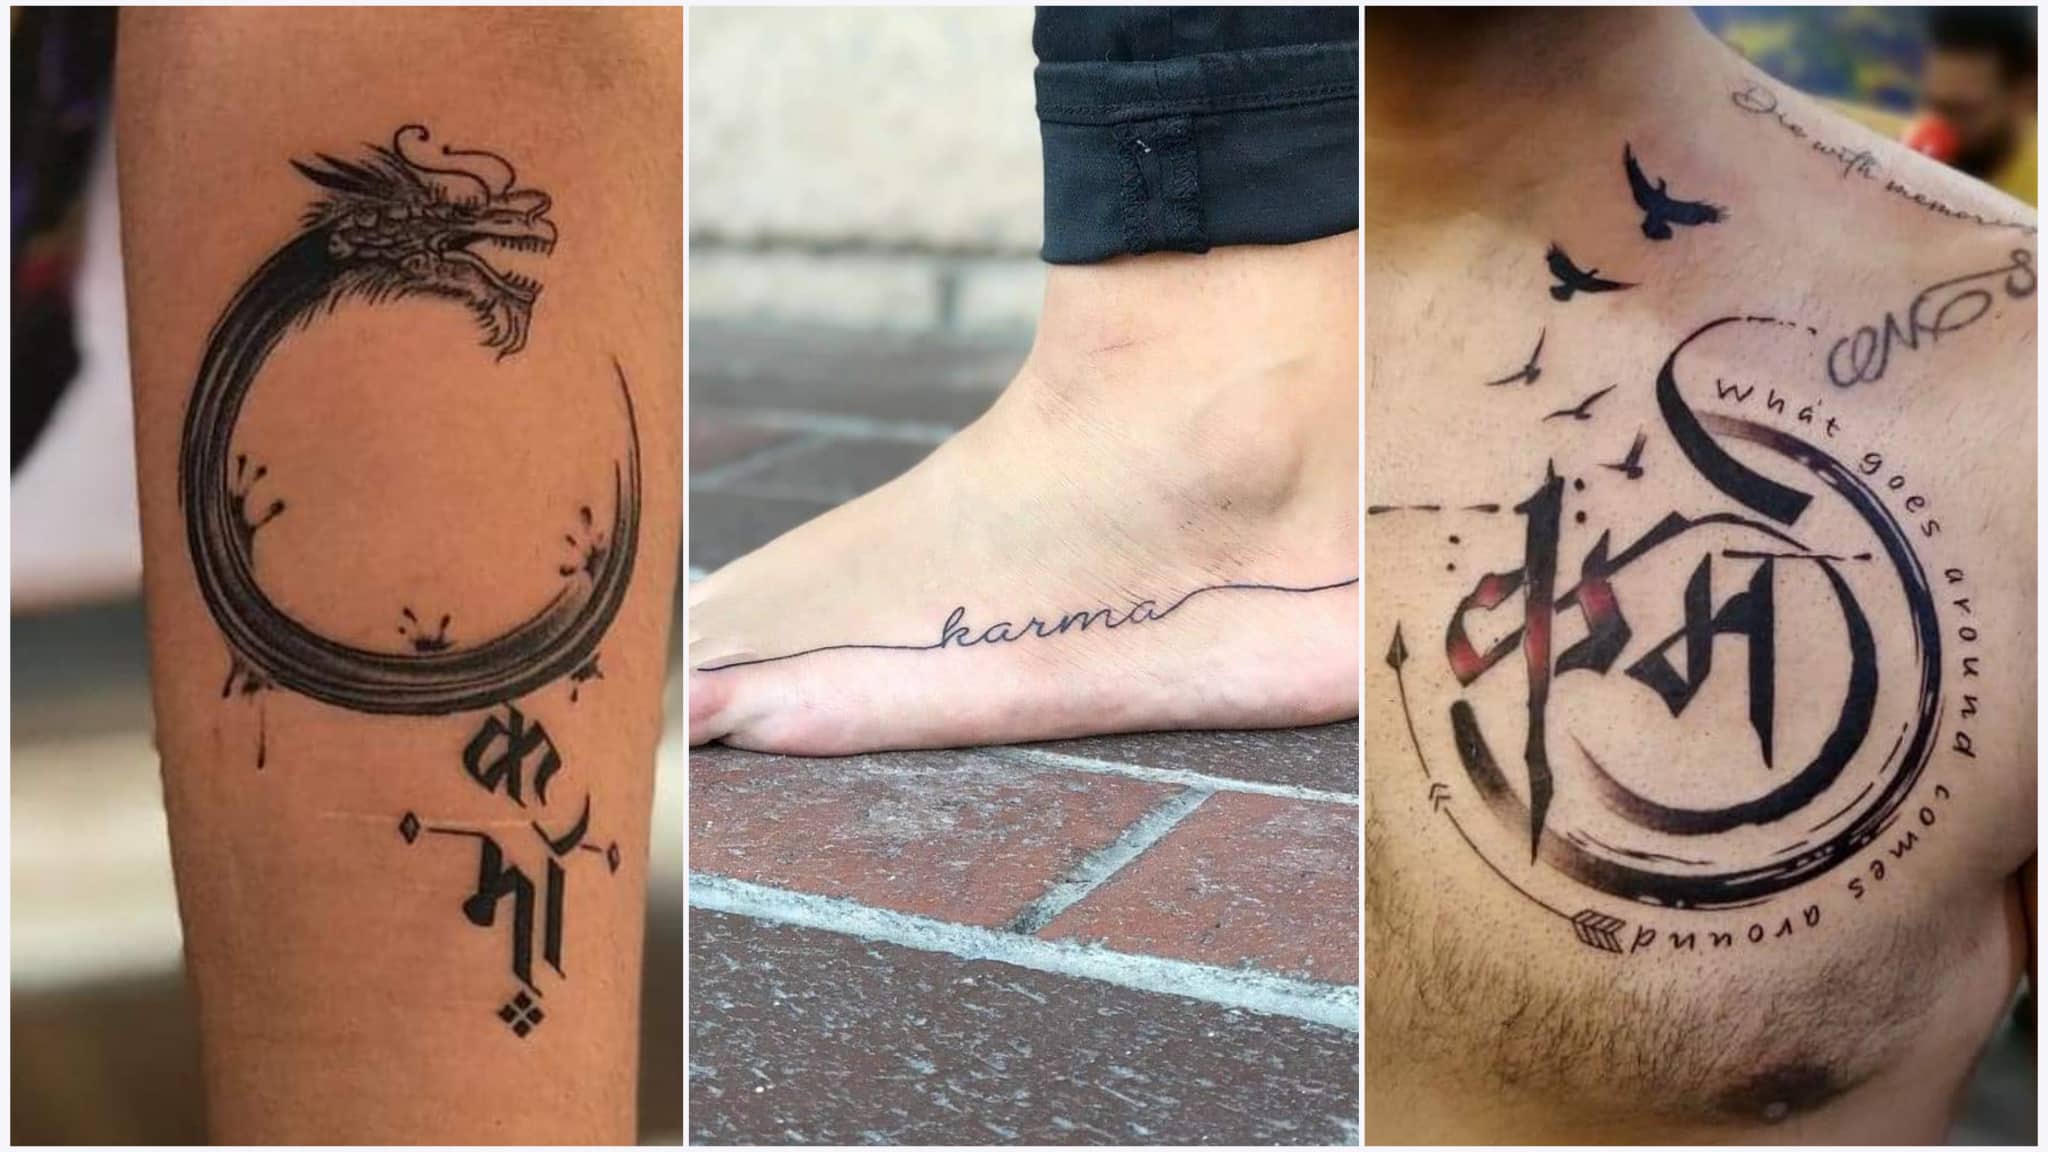 Karma Tattoo